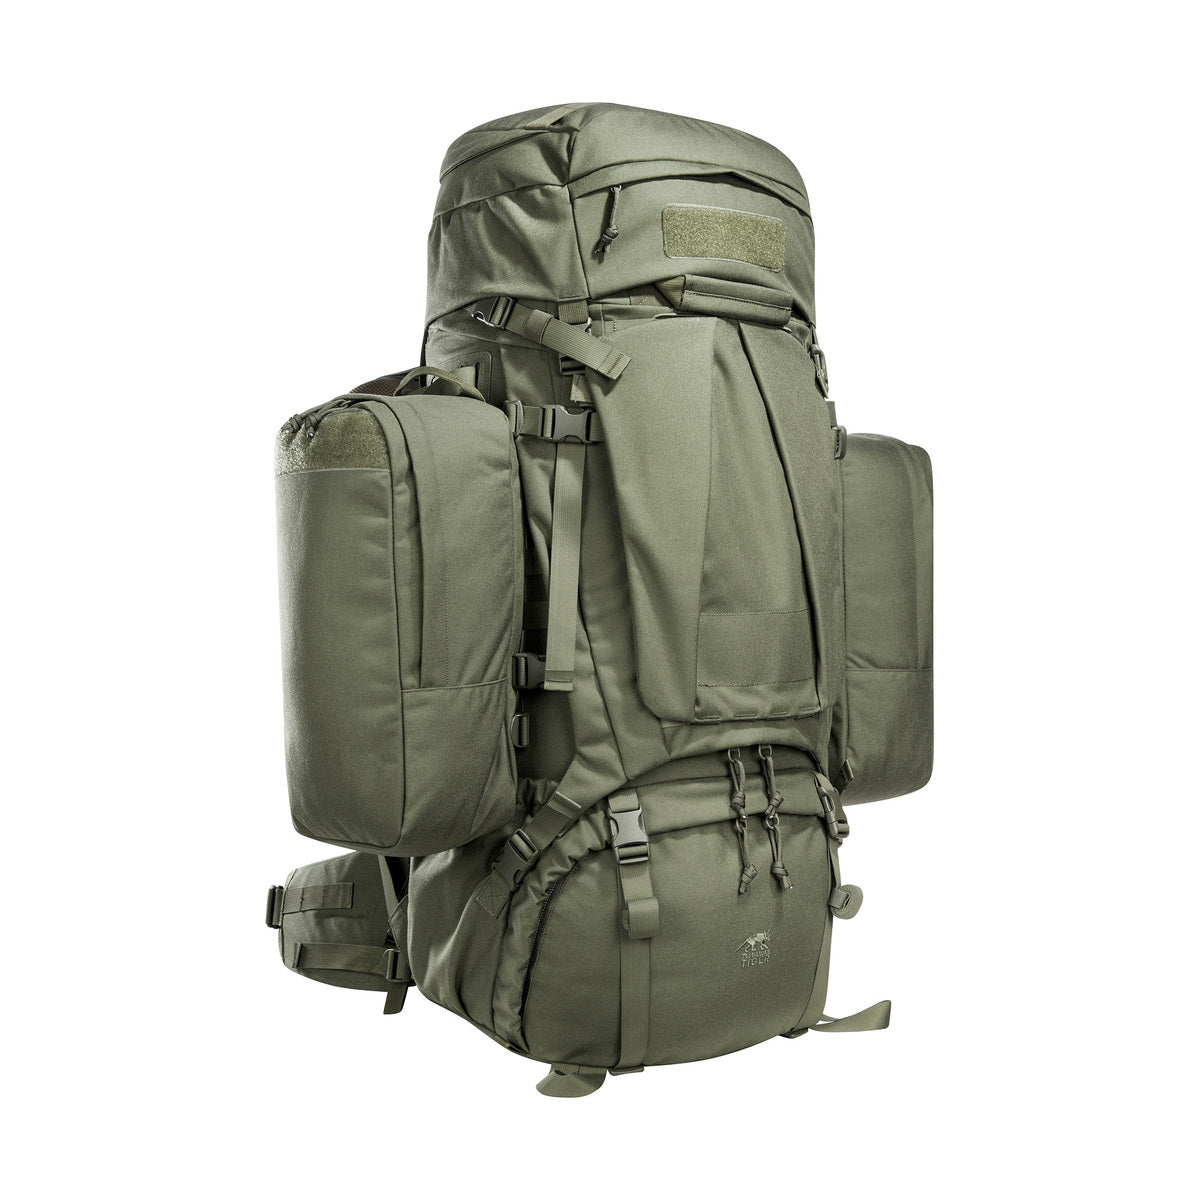 Tasmanian Tiger Mil OPS Pack 80+24 Backpack Olive Bags, Packs and Cases Tasmanian Tiger Tactical Gear Supplier Tactical Distributors Australia